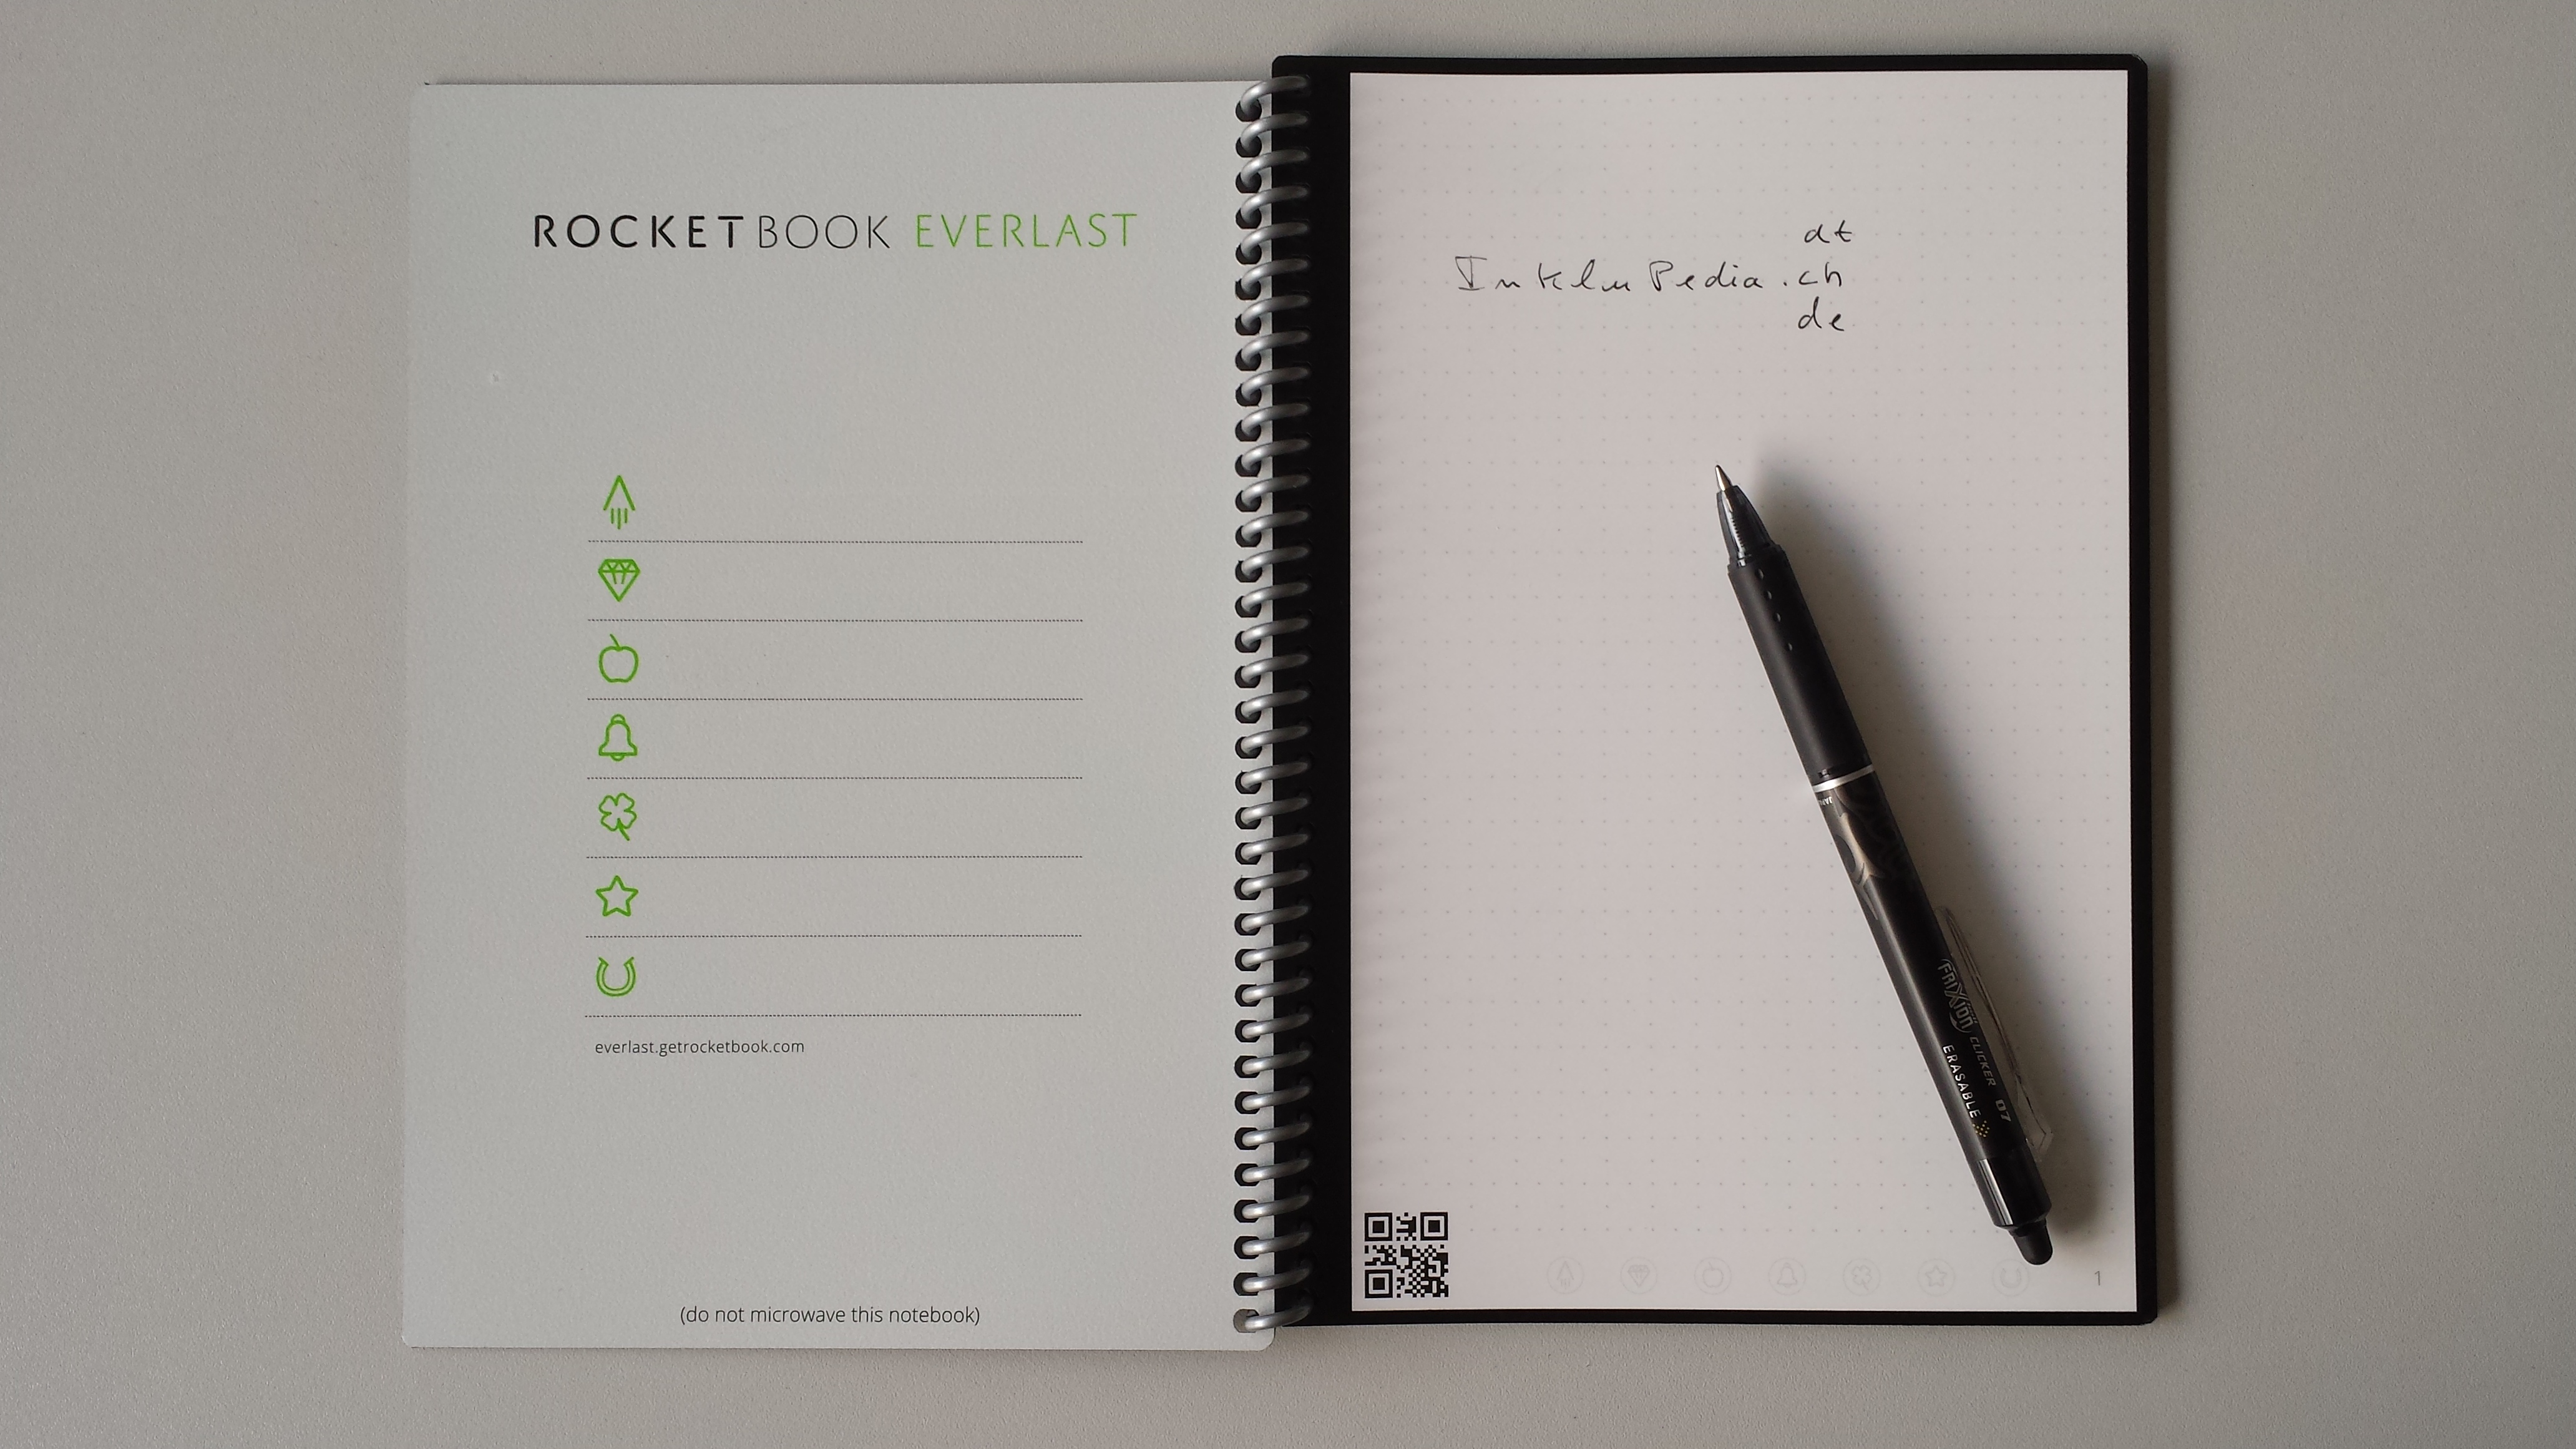 Datei:Rocketbook Everlast.jpg